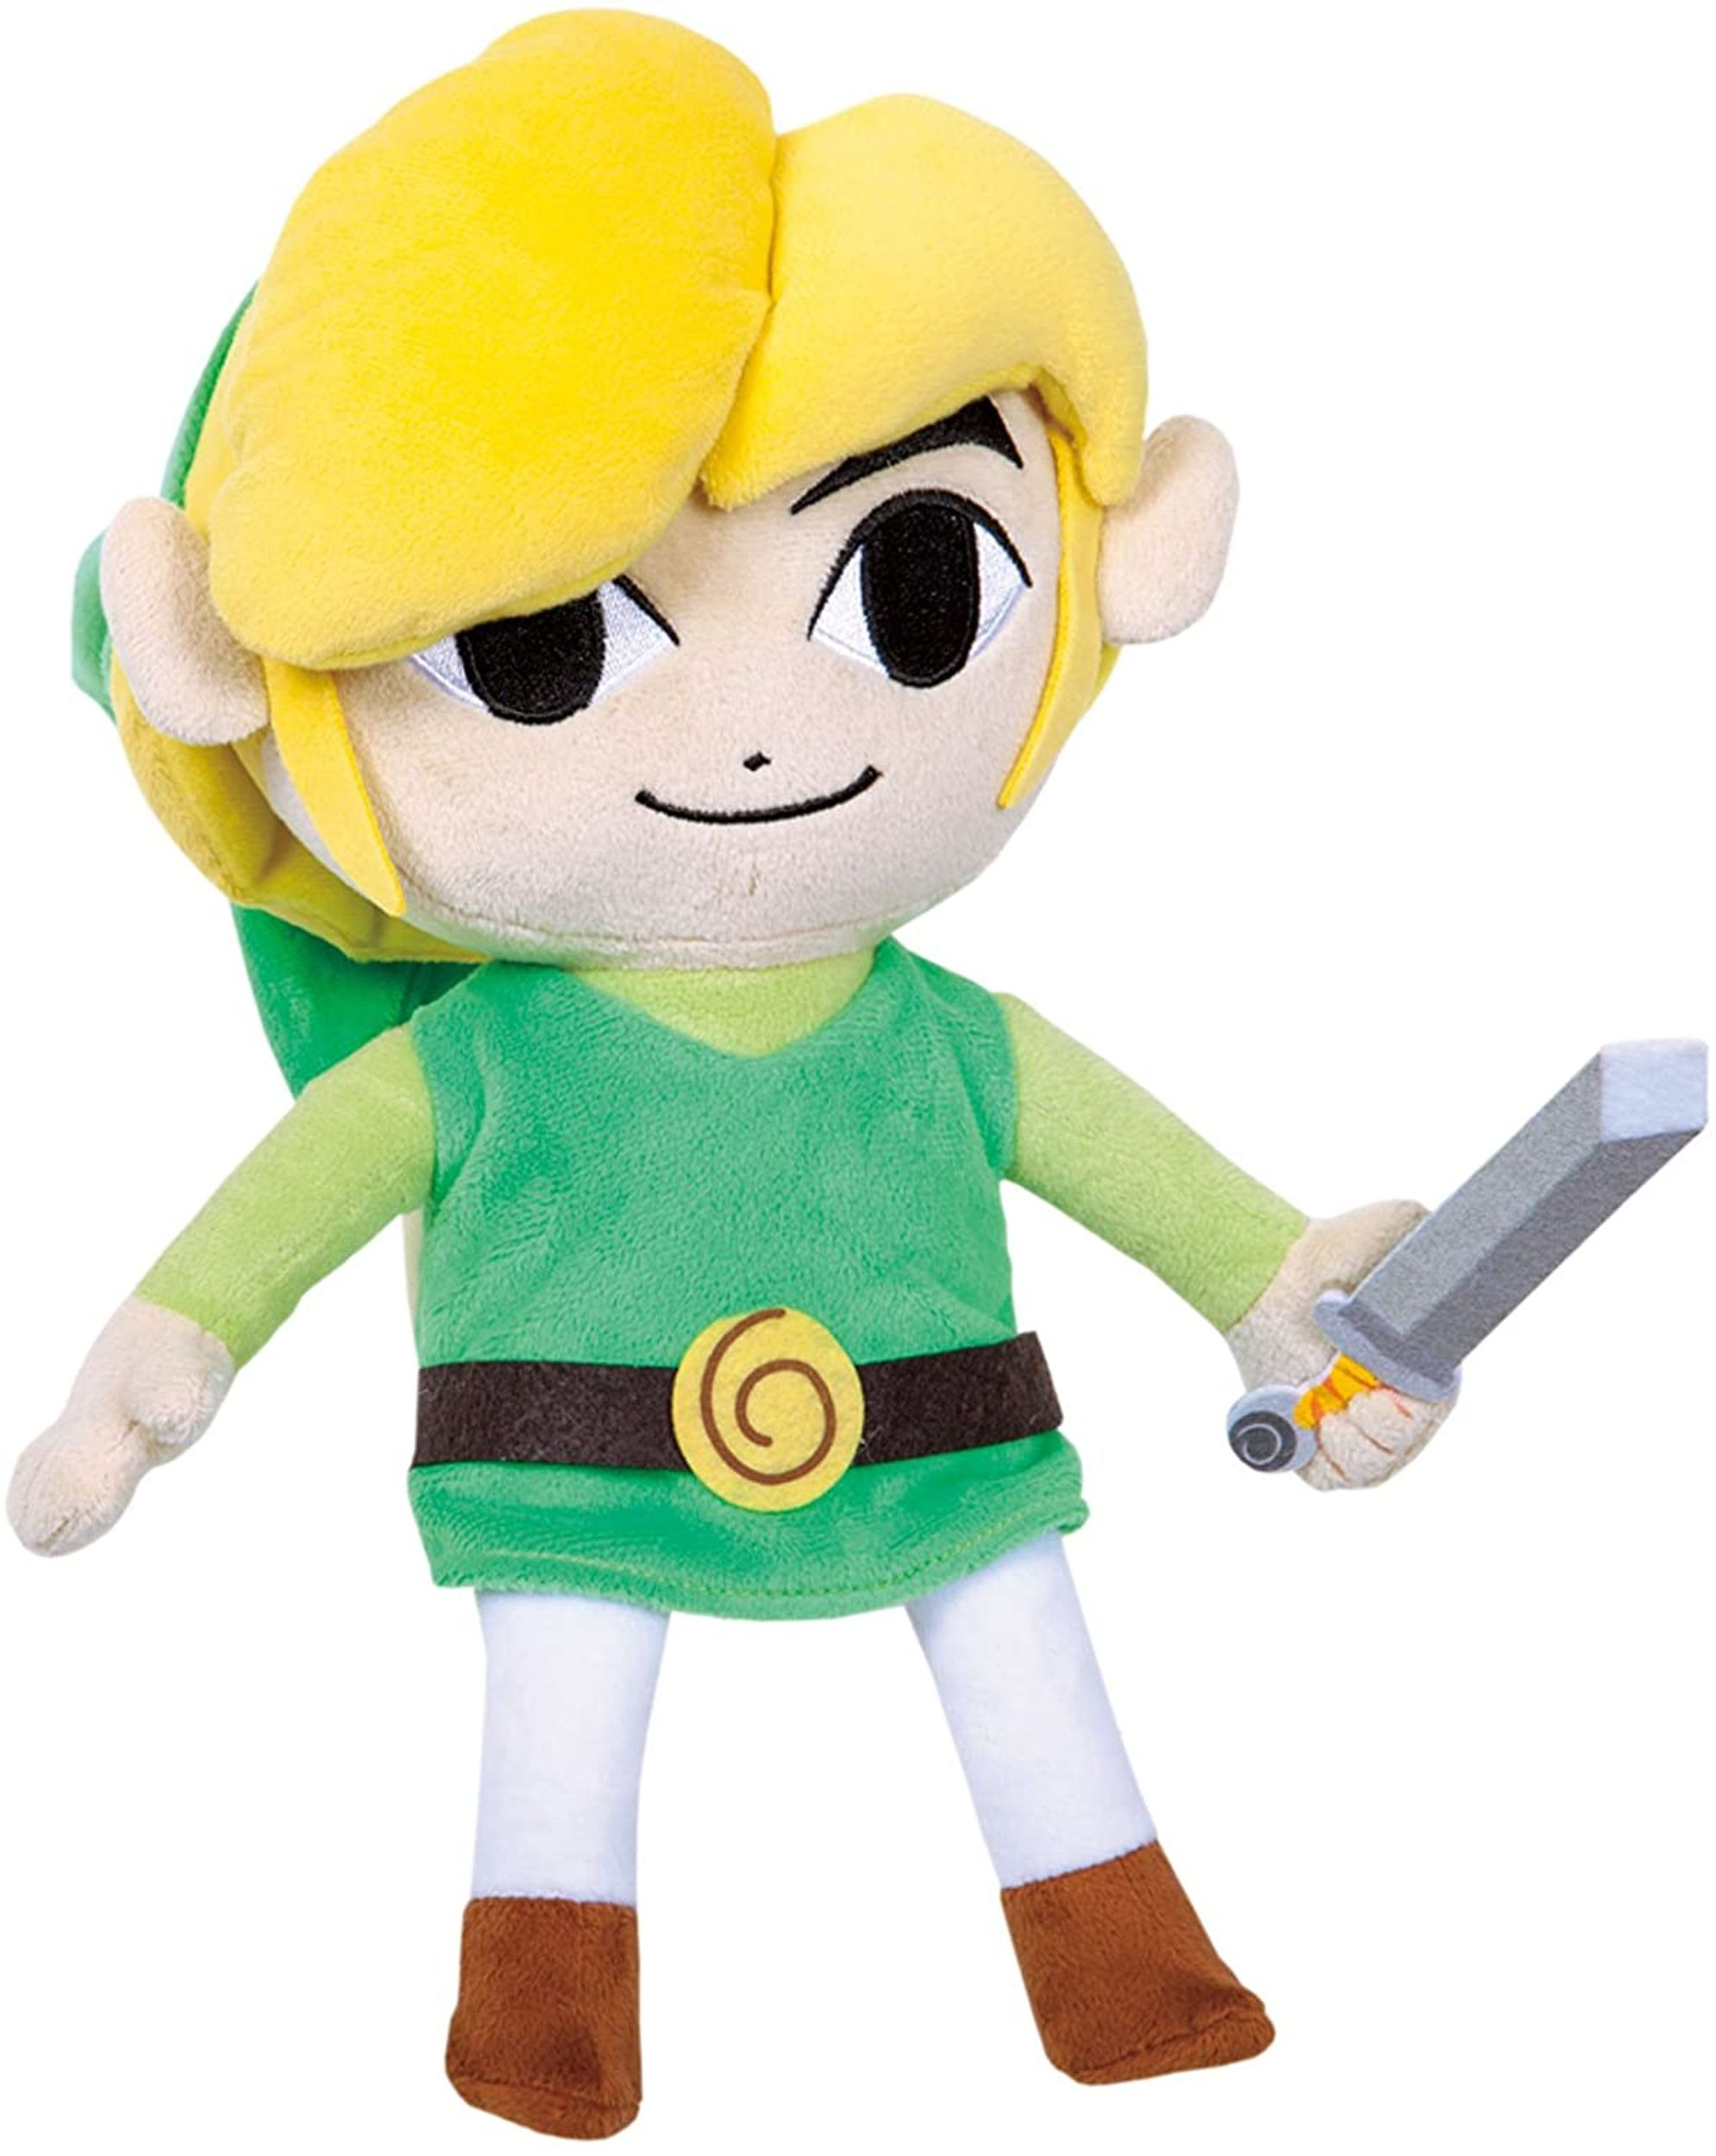 Zelda Link NINTENDO Plüschfigur